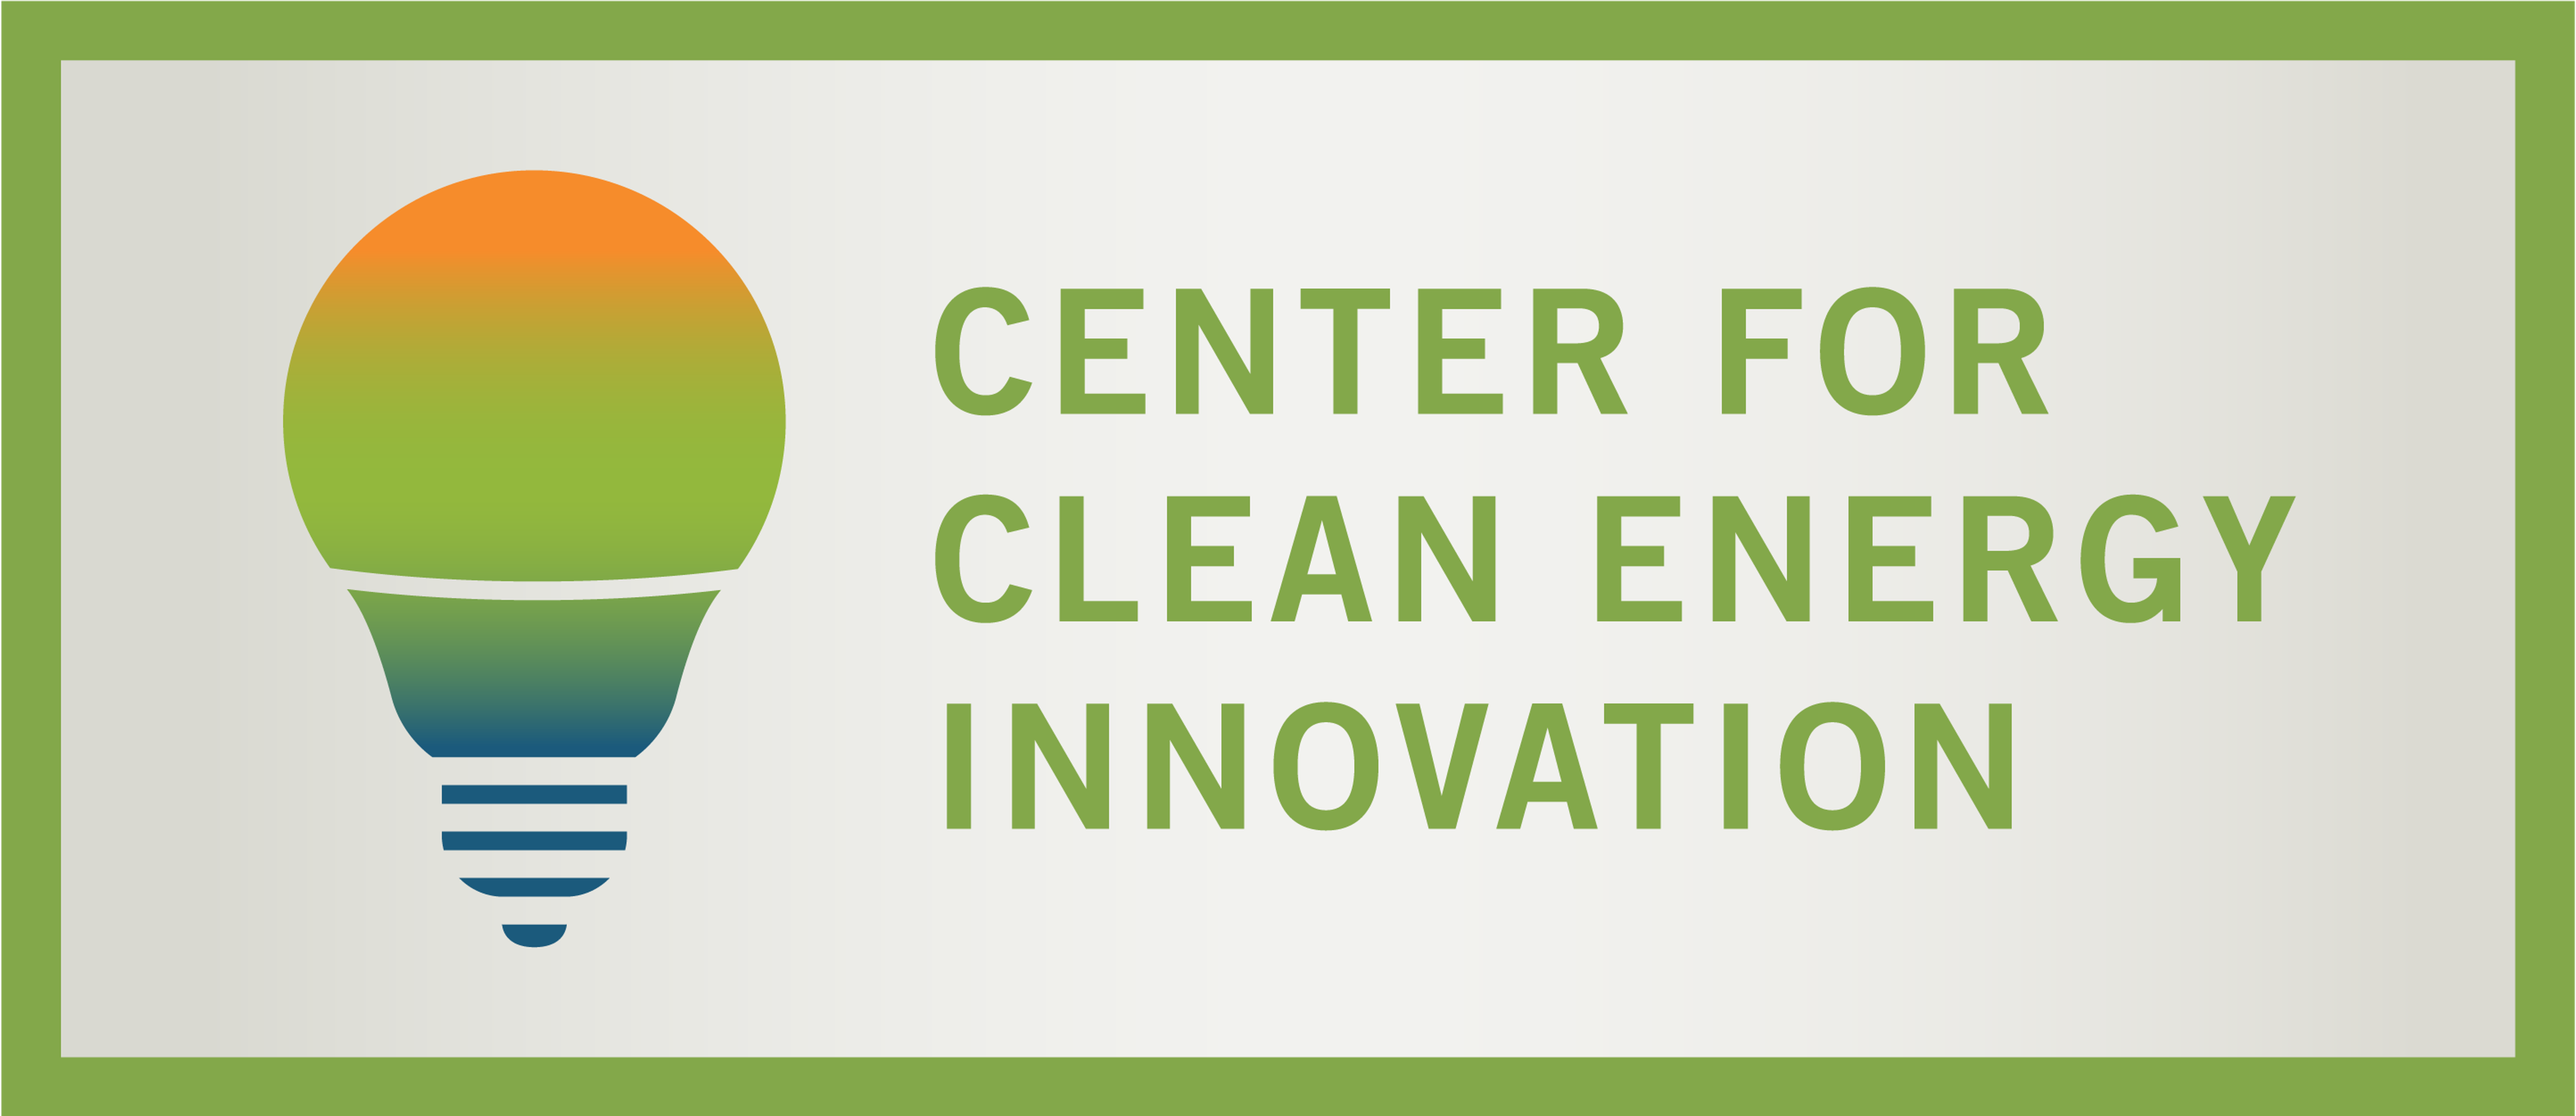 Center for Clean Energy Innovation